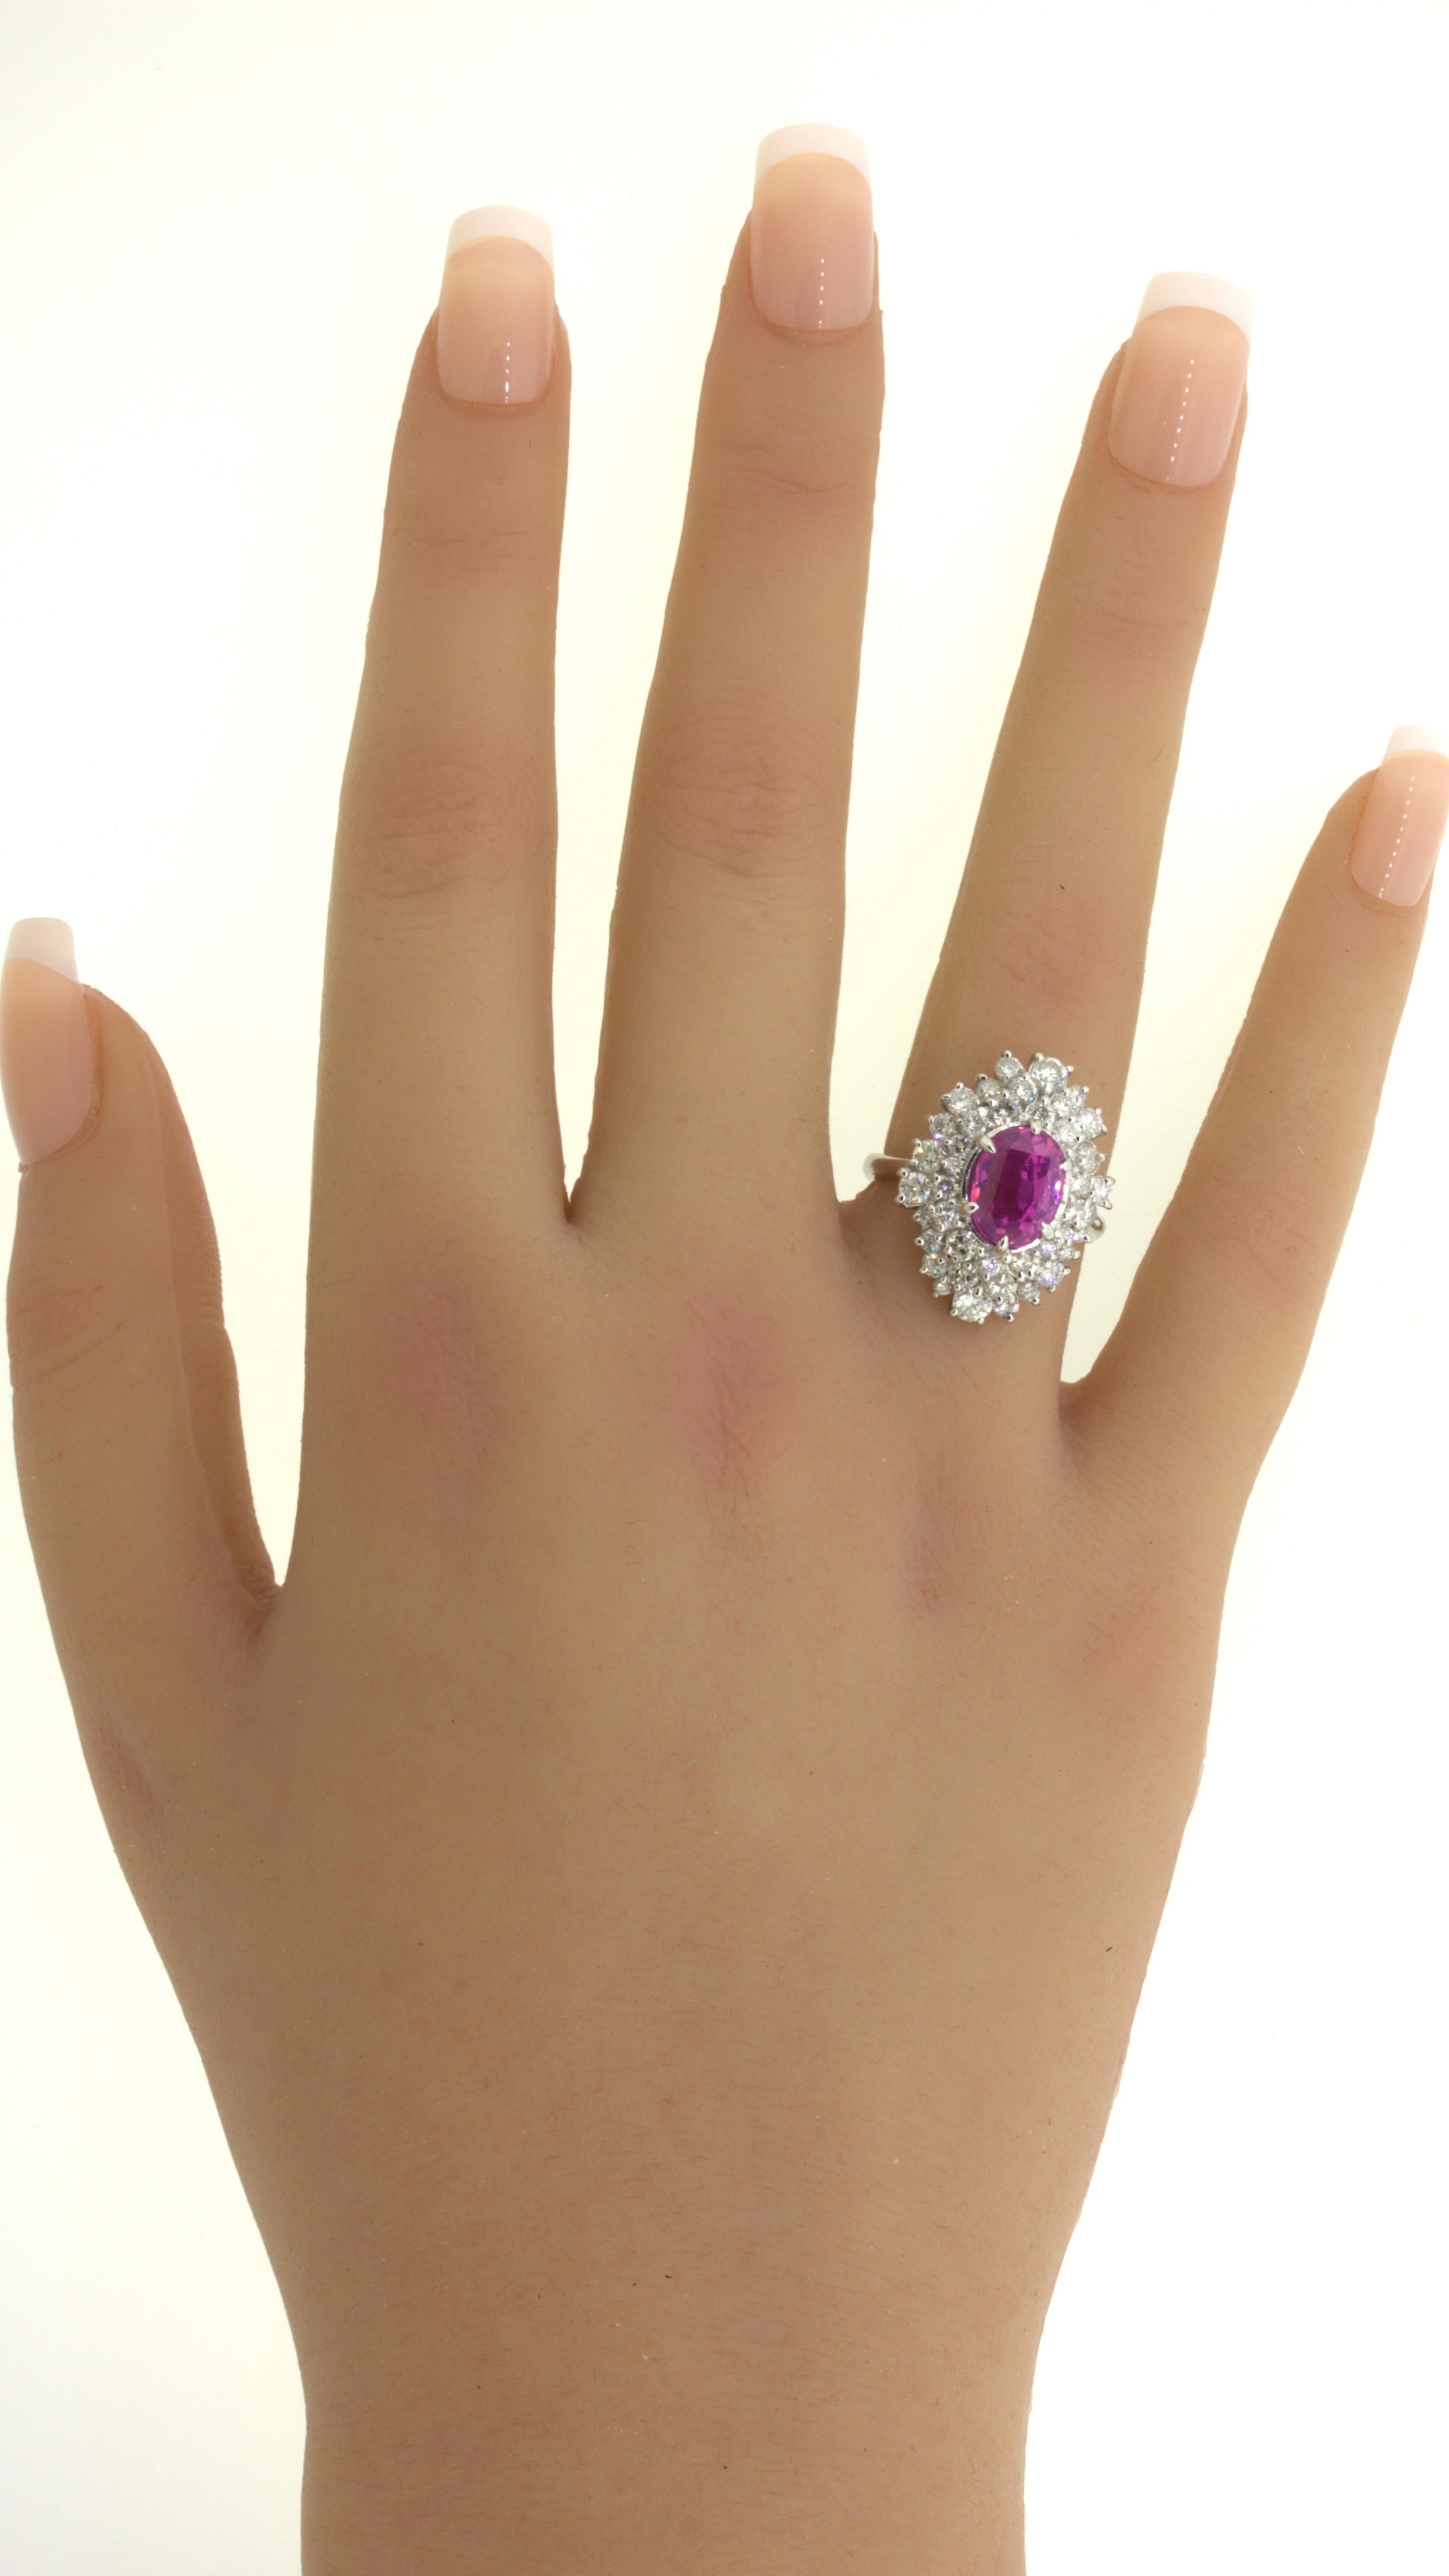 4.25 Carat “Barbie Pink” Sapphire Diamond Platinum Ring, GIA Certified For Sale 11